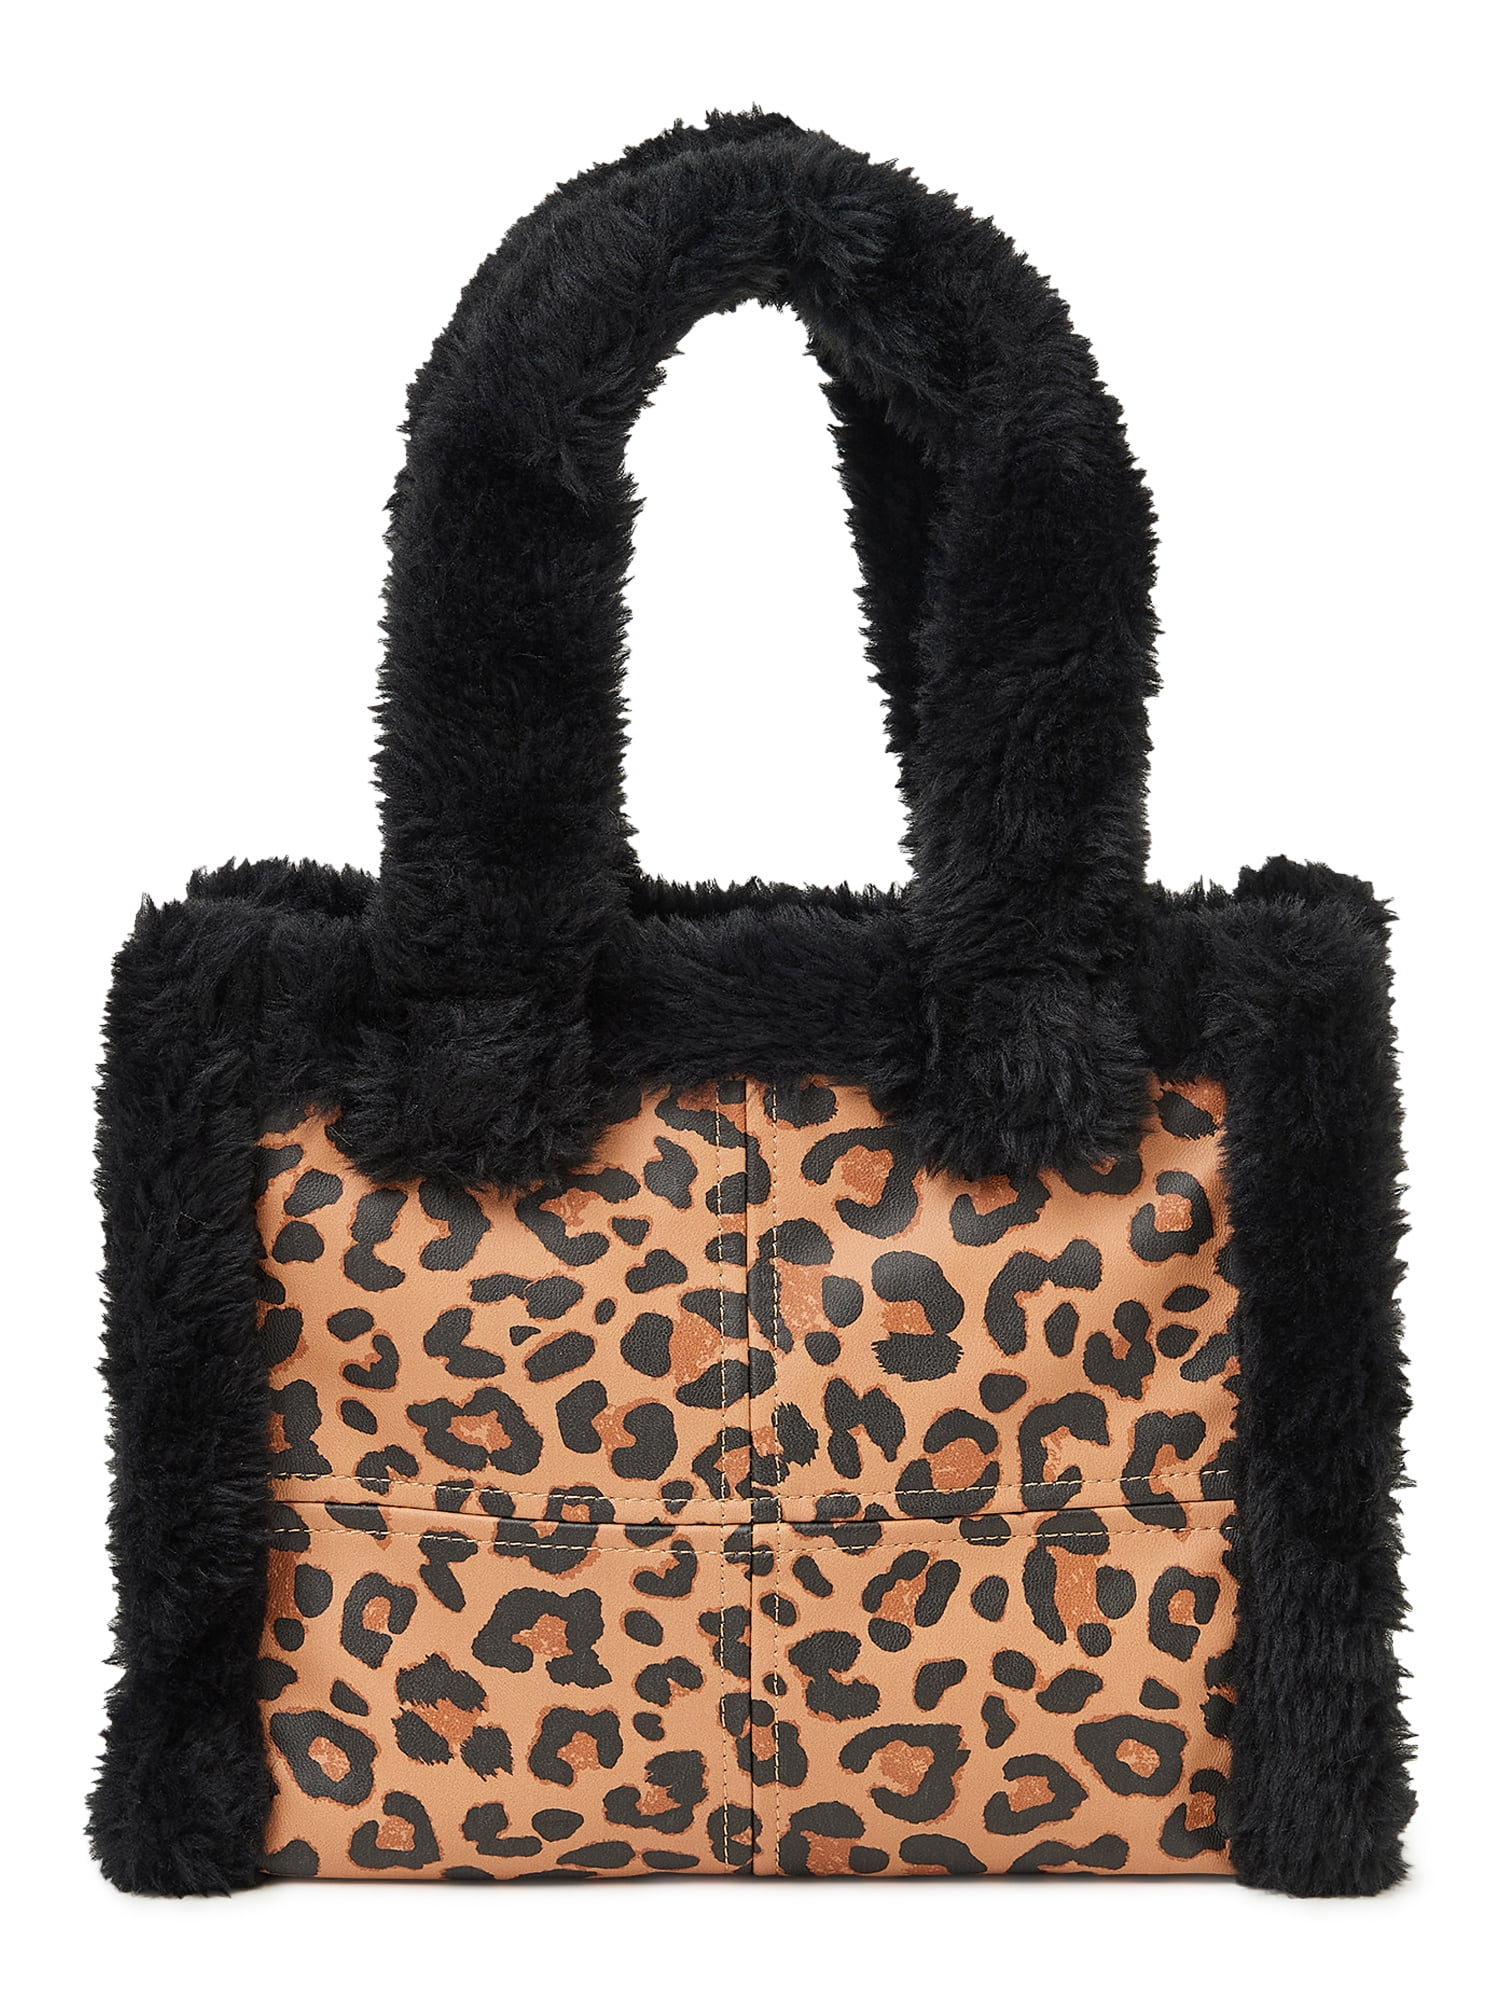 Leopard Print Grab Bag Faux Leather Ladies Mini Top Handle Handbag Animal Print 